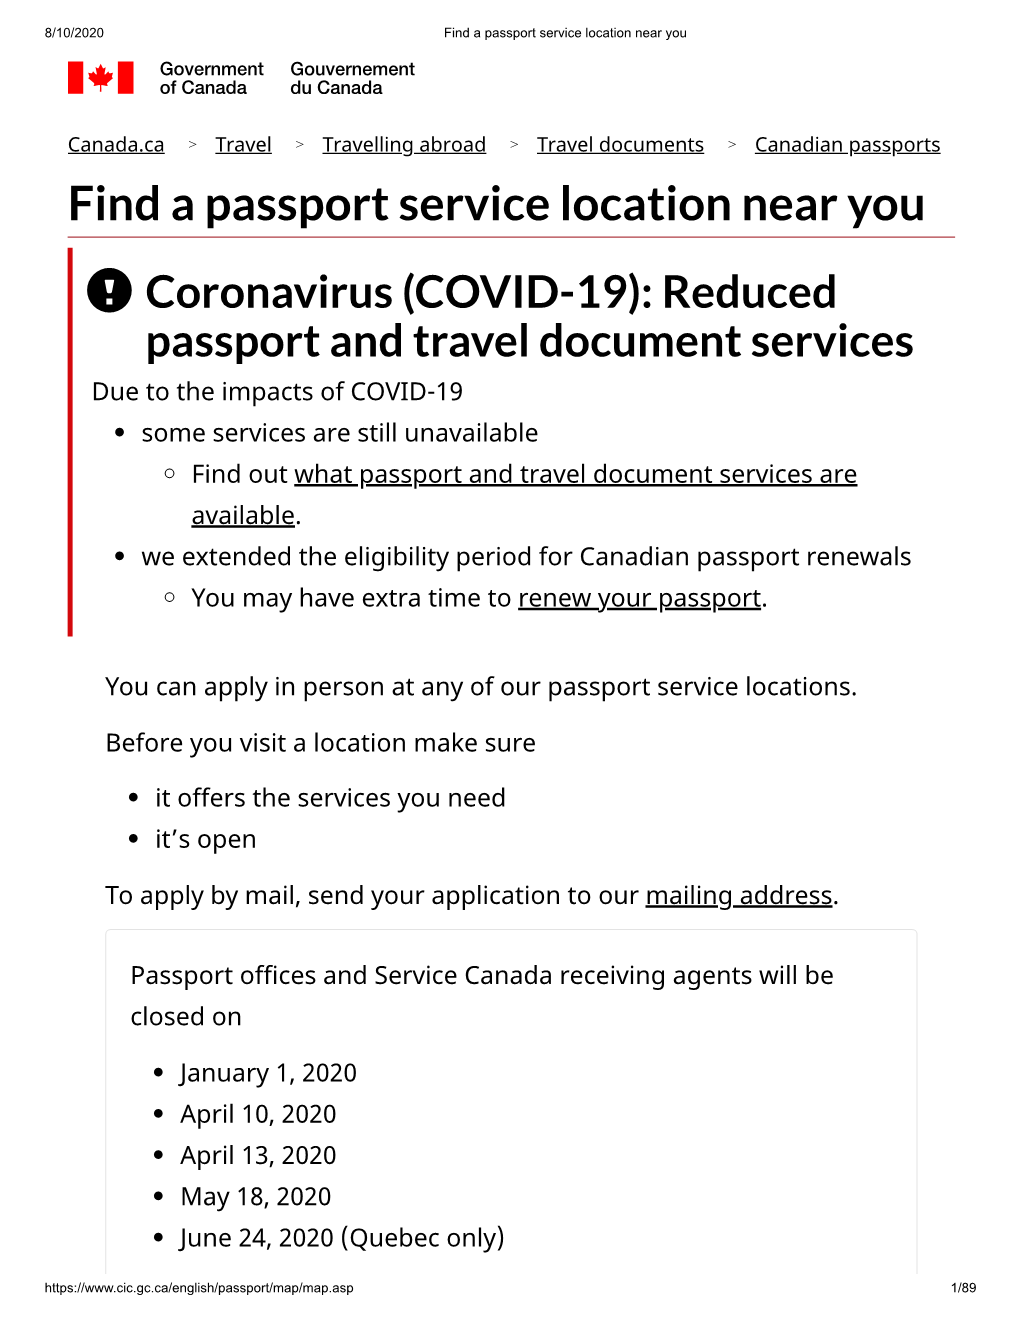 Find a Passport Service Location Near You